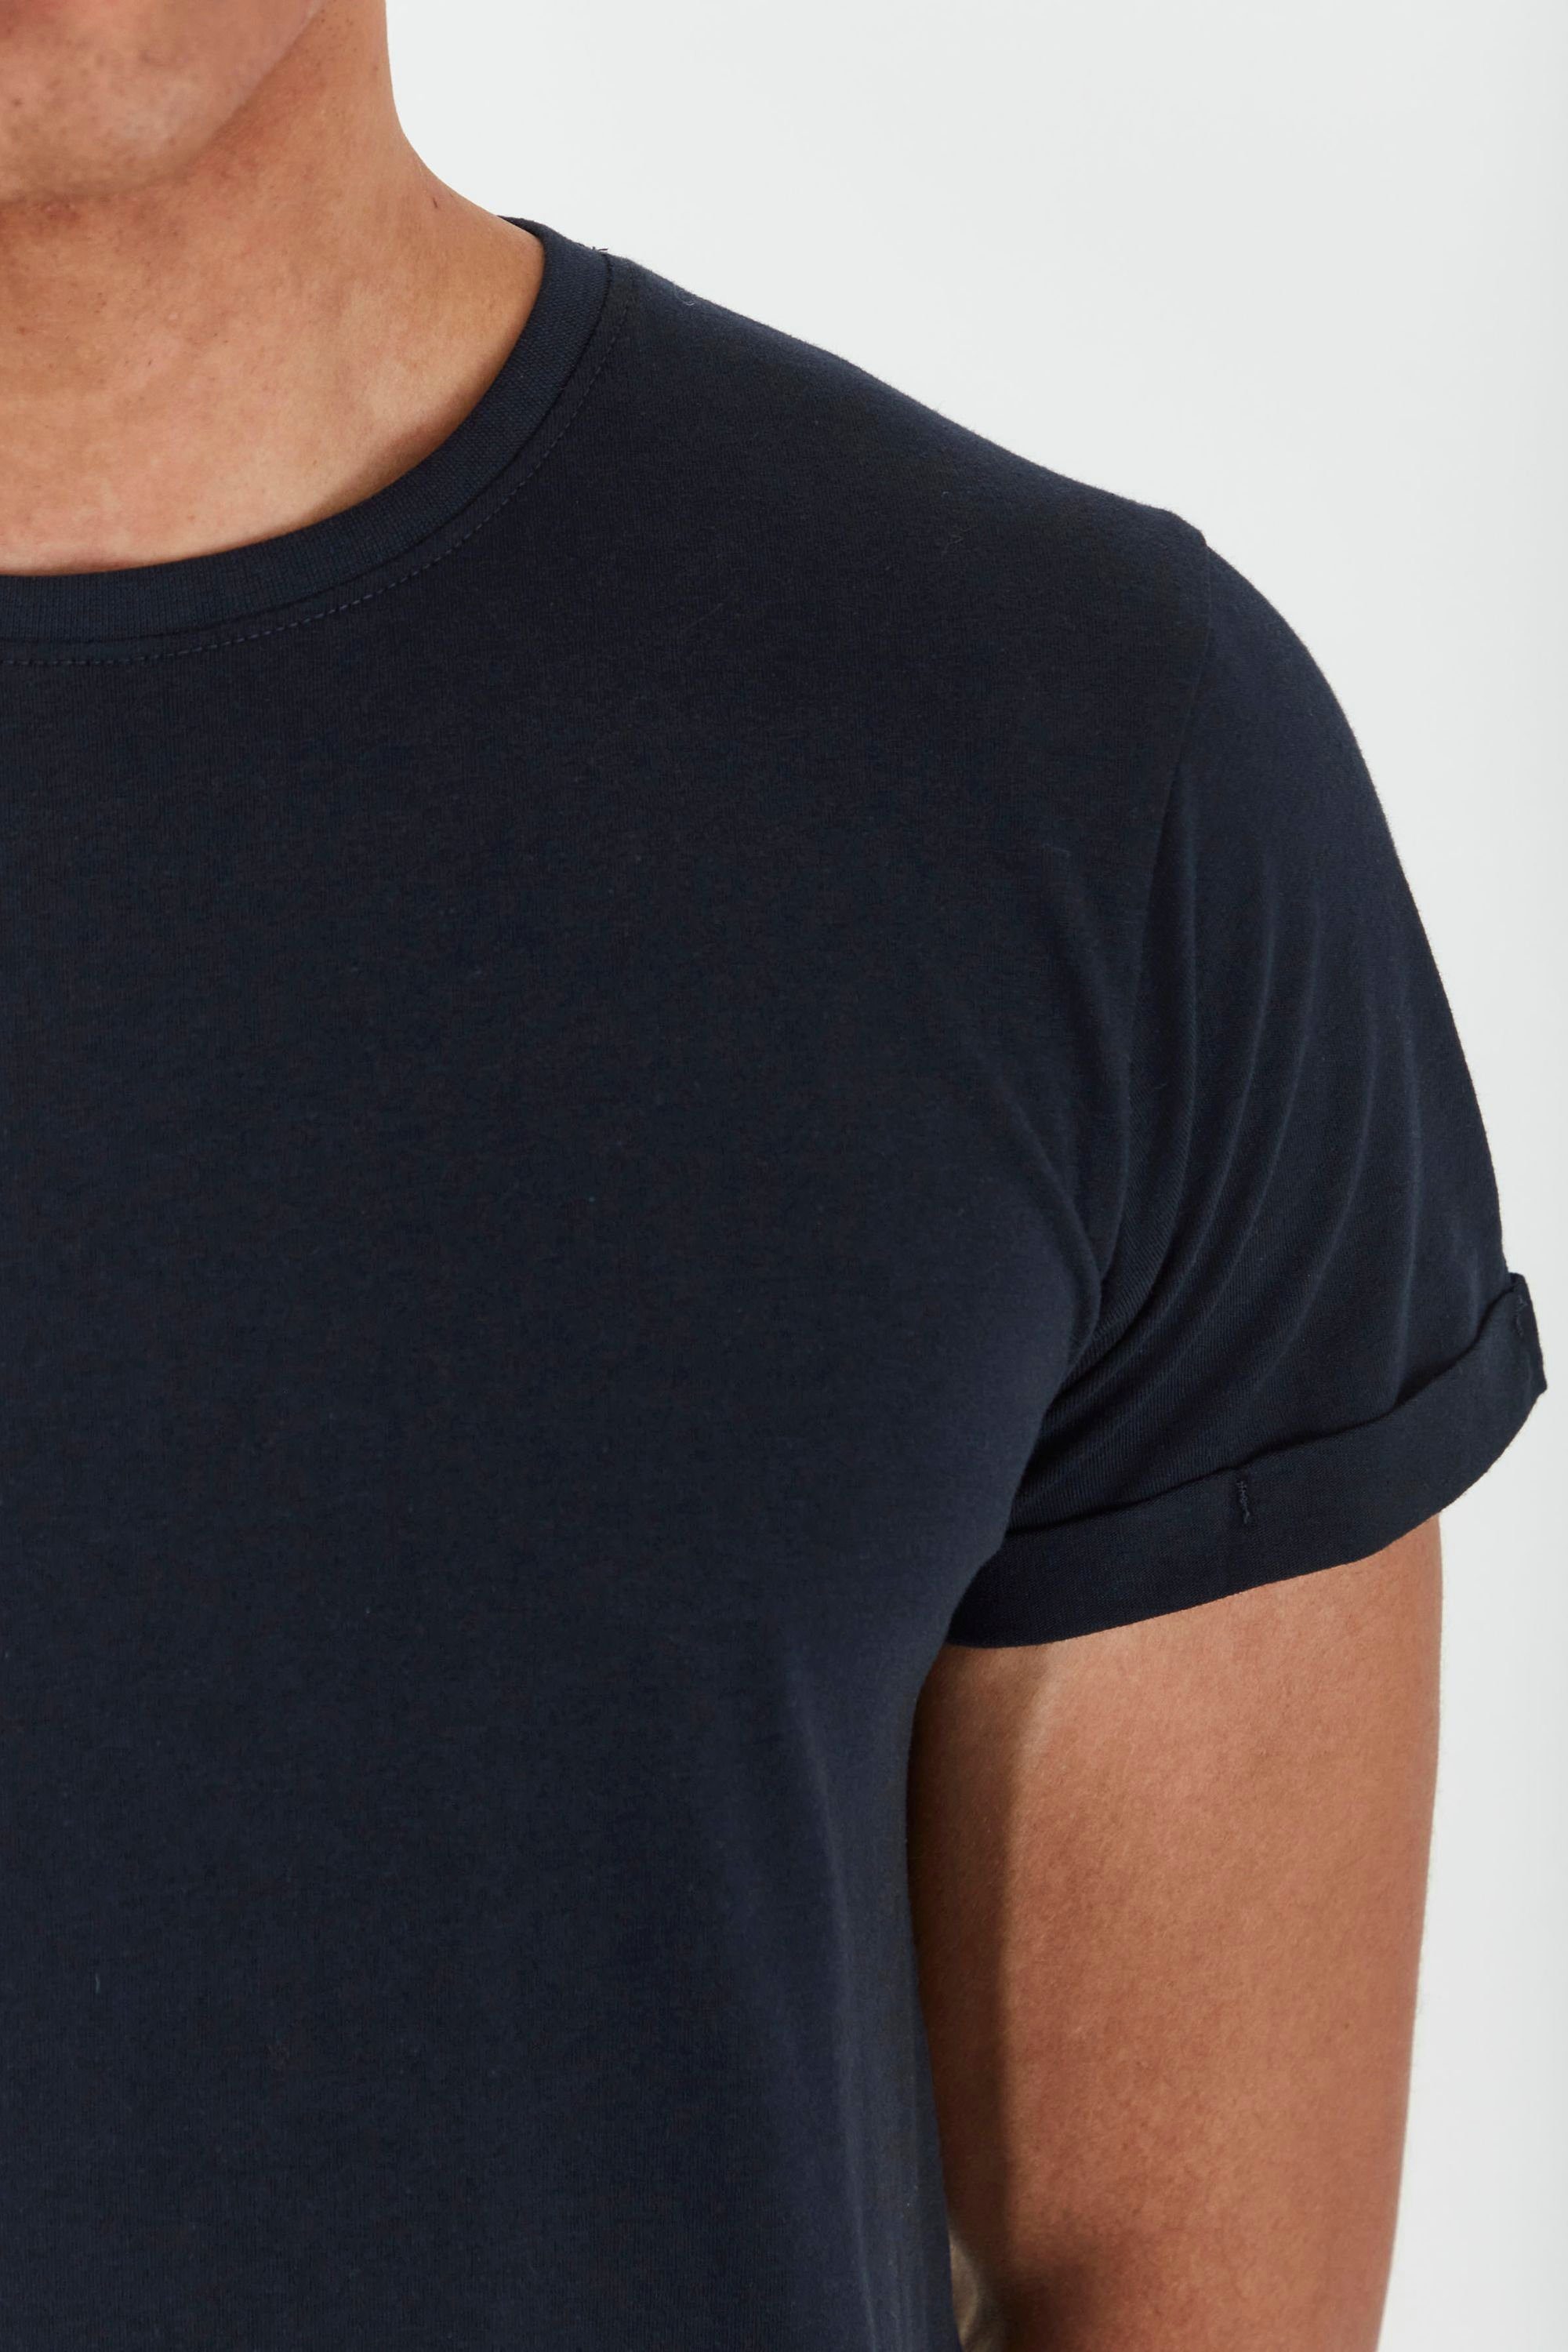 T-Shirt Blue !Solid Longshirt Insignia (194010) SDLongo